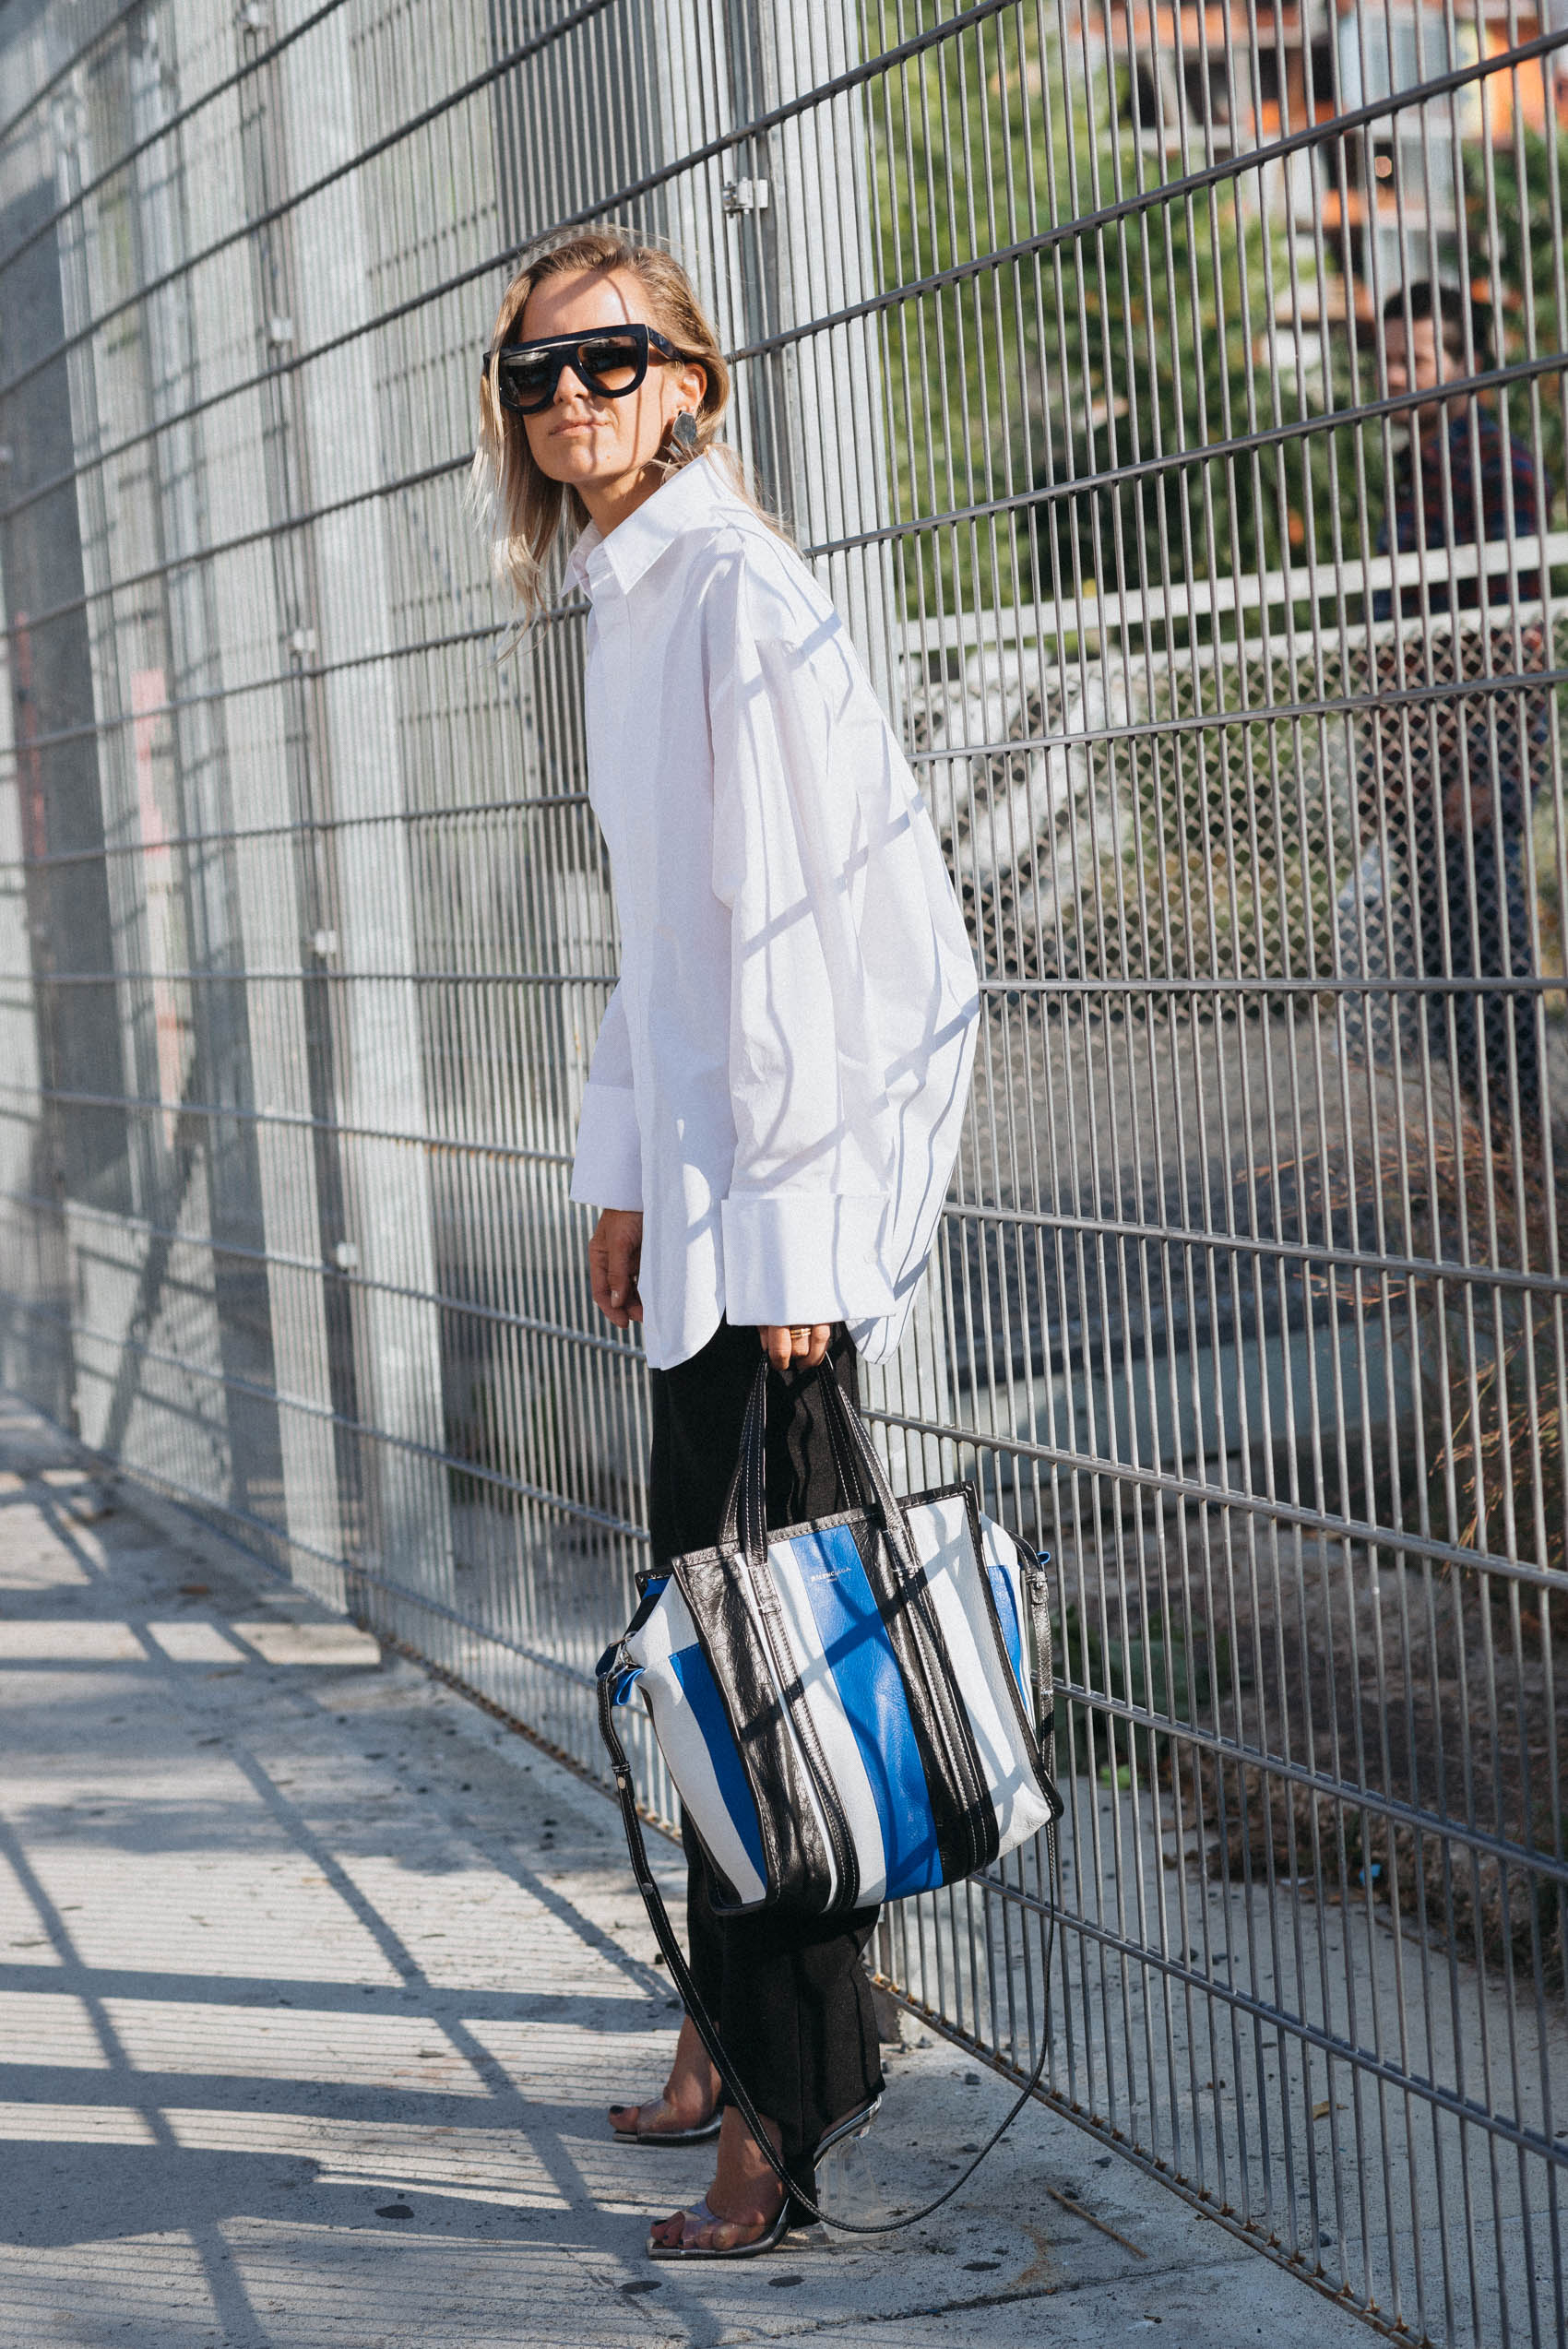 New York Fashion Week blogger style with Celine sunglasses, stirrups pants and Balenciaga shopping bag